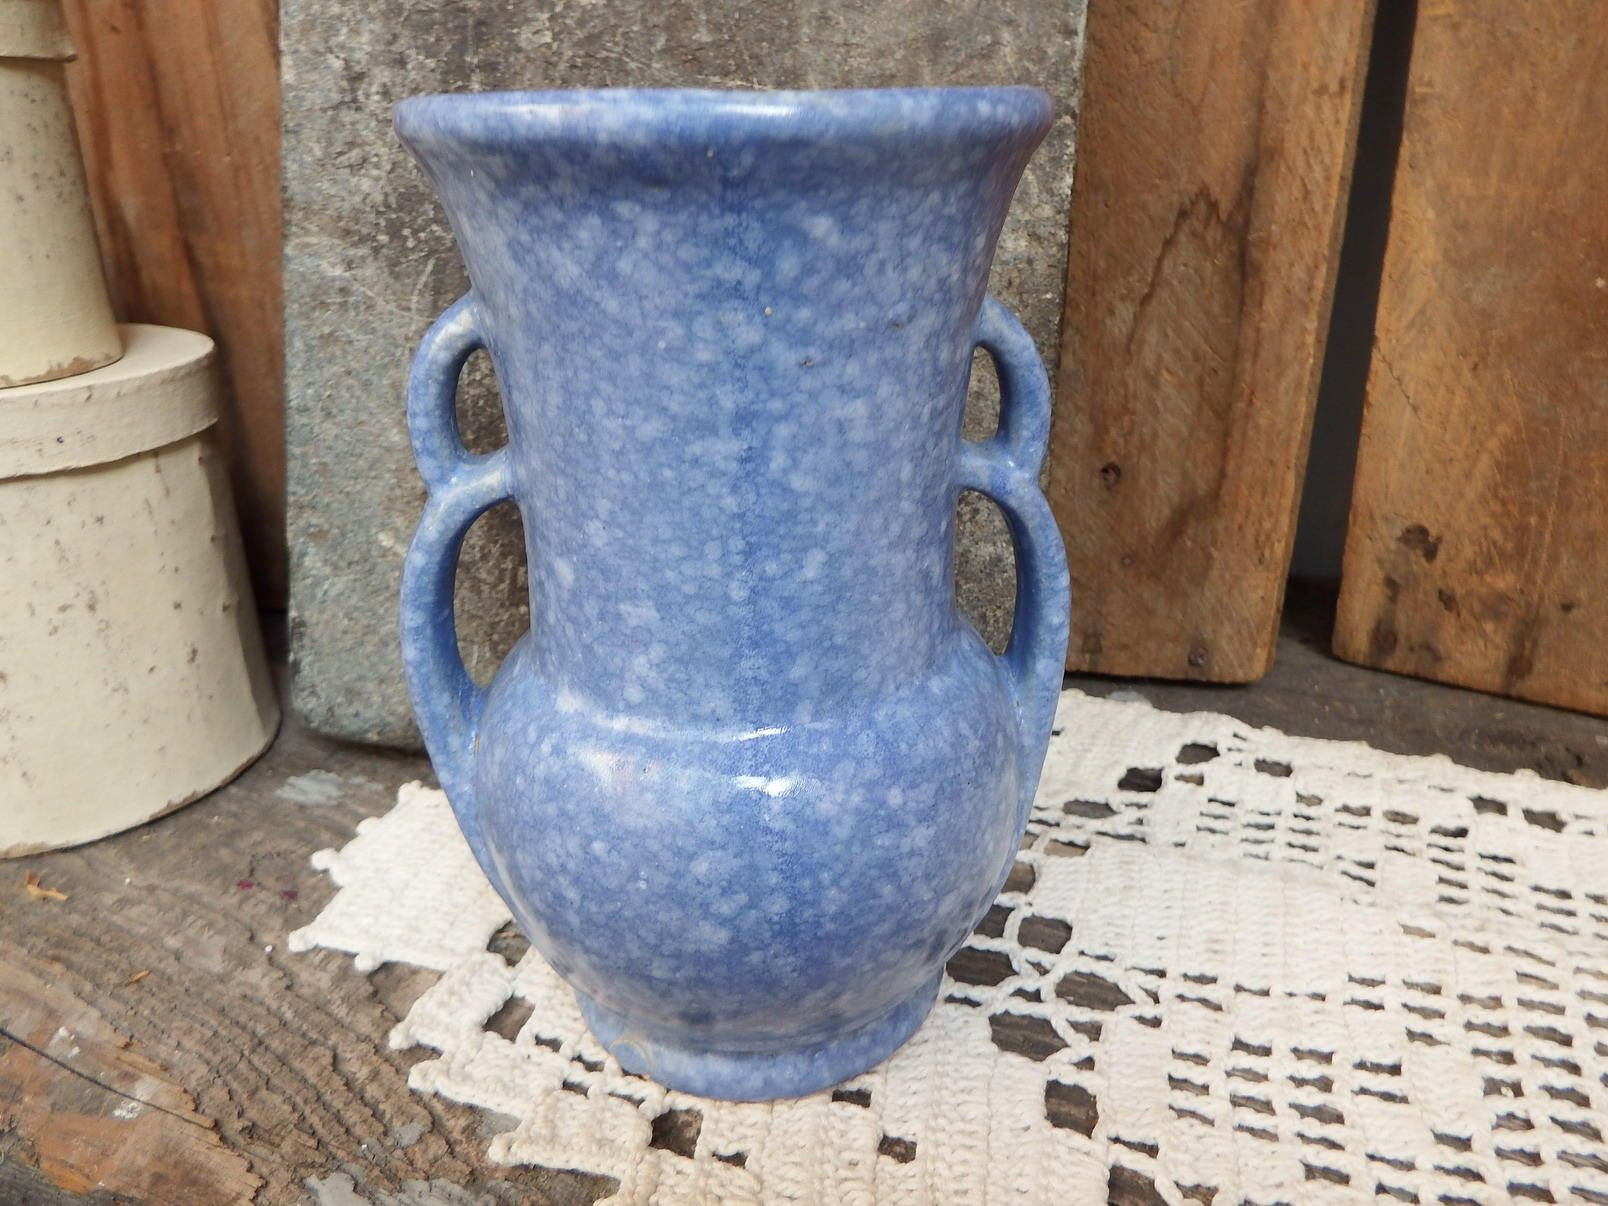 vintage blue vase of vintage mccoy double handle vase art deco style mccoy pottery blue with regard to vintage mccoy double handle vase art deco style mccoy pottery blue white spatter design